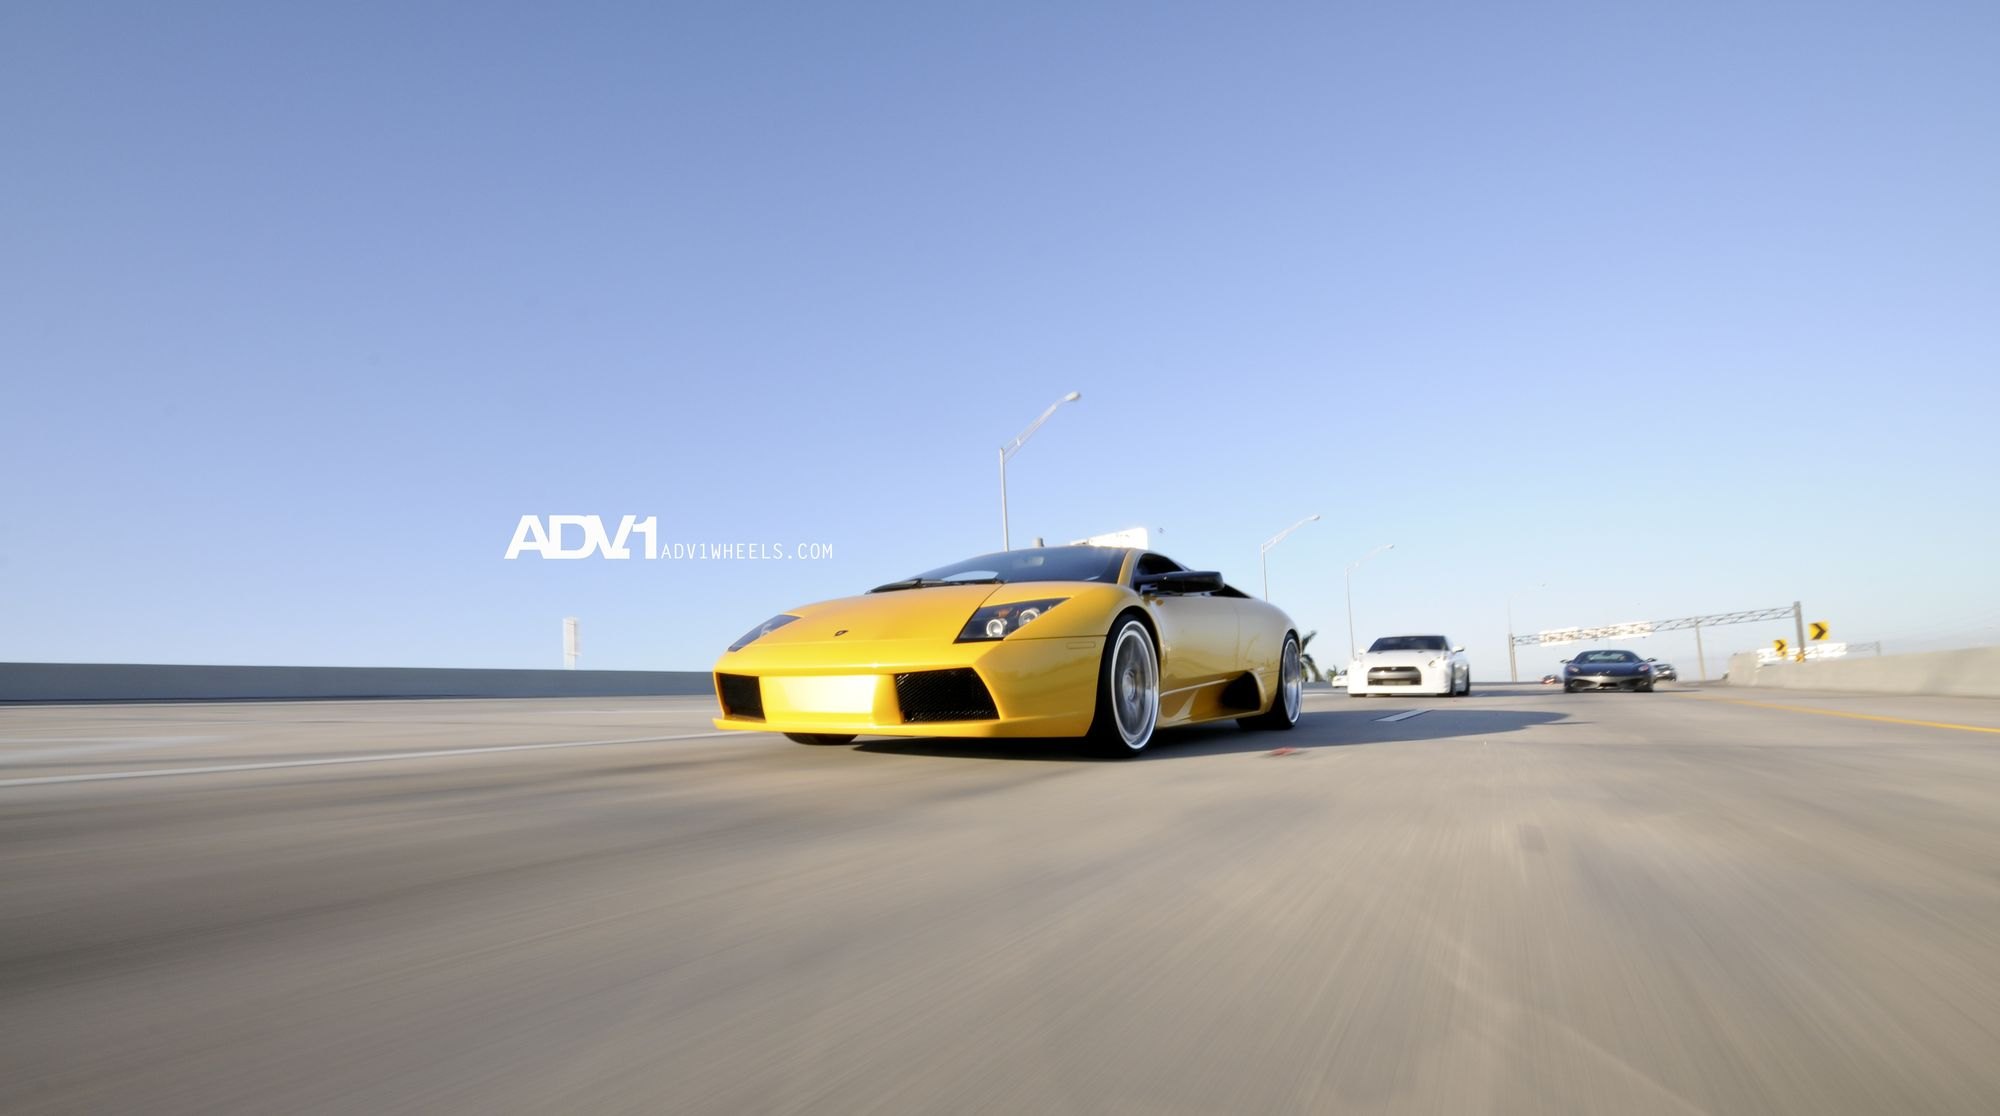 Custom Yellow Lamborghini Murcielago with ADV Rims - Photo by ADV.1